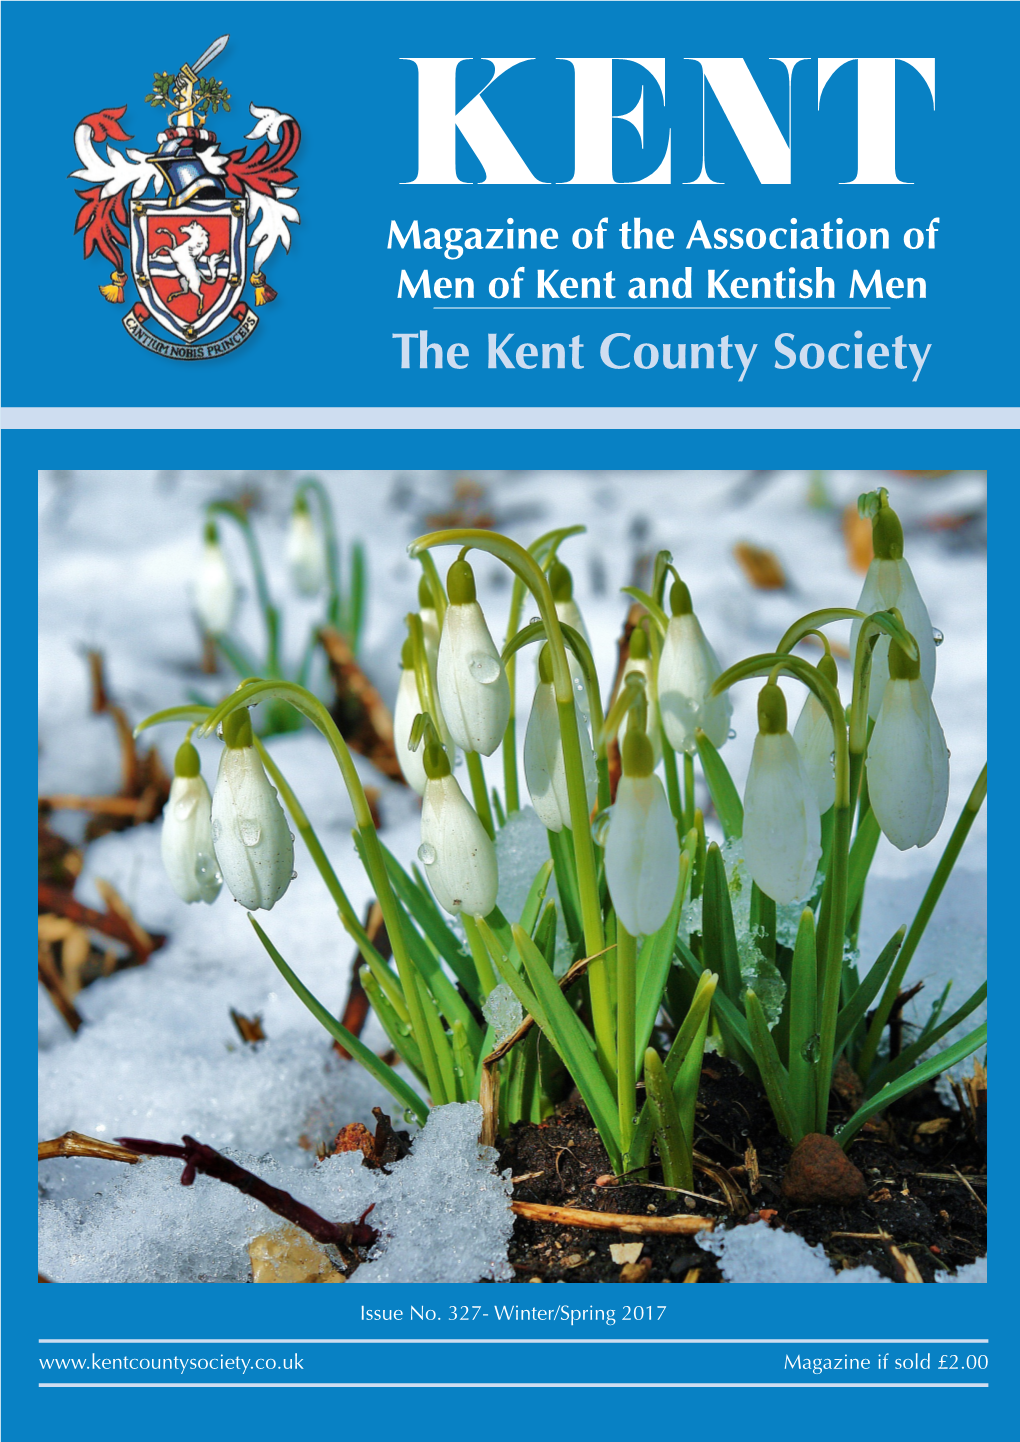 The Kent County Society